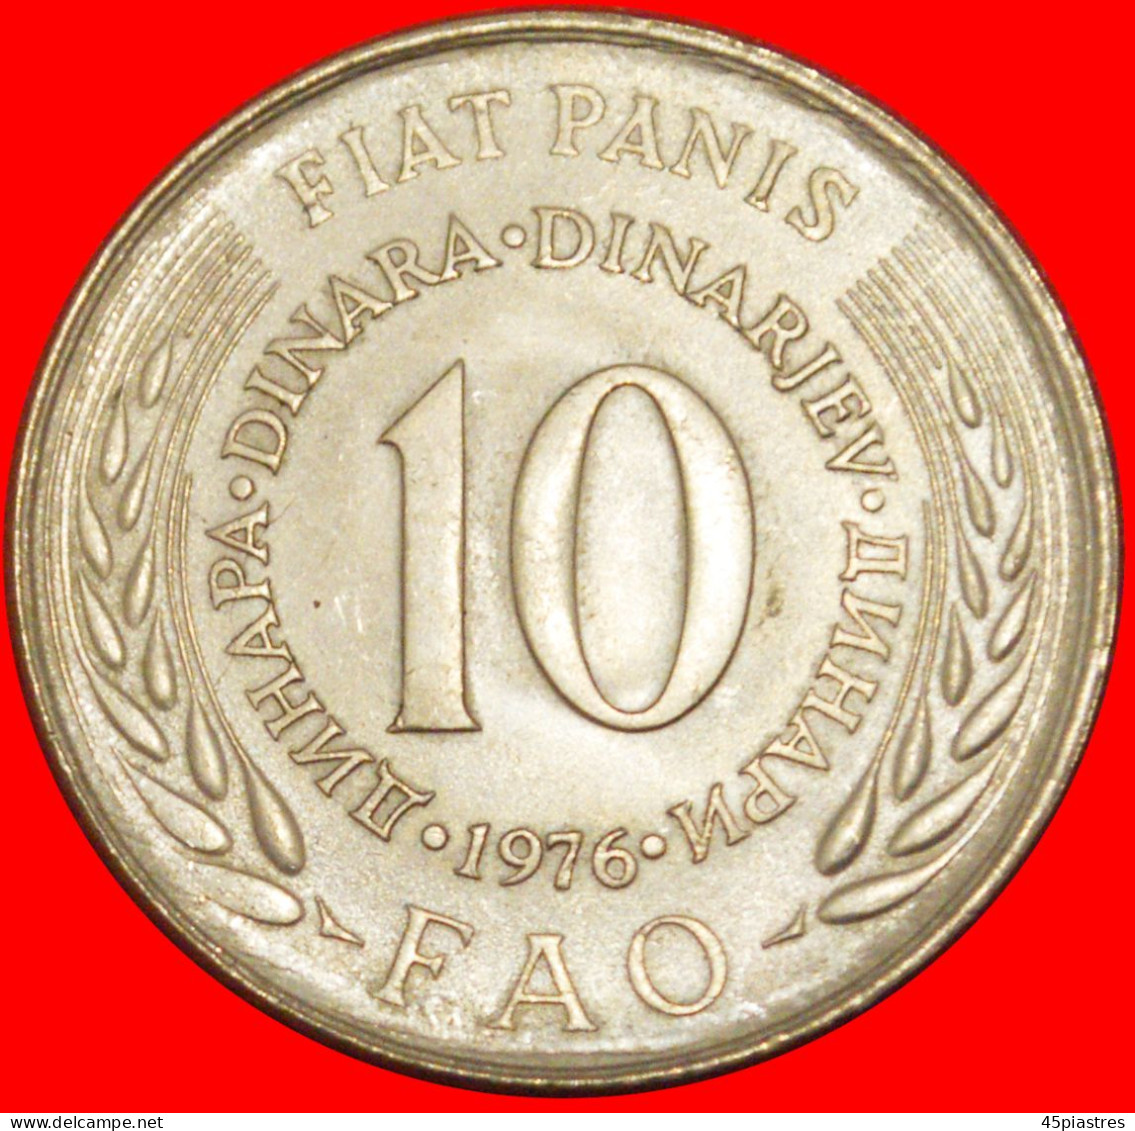 * COMMUNIST STAR FAO: YUGOSLAVIA  10 DINARS 1976 UNC! · LOW START ·  NO RESERVE! - Yougoslavie